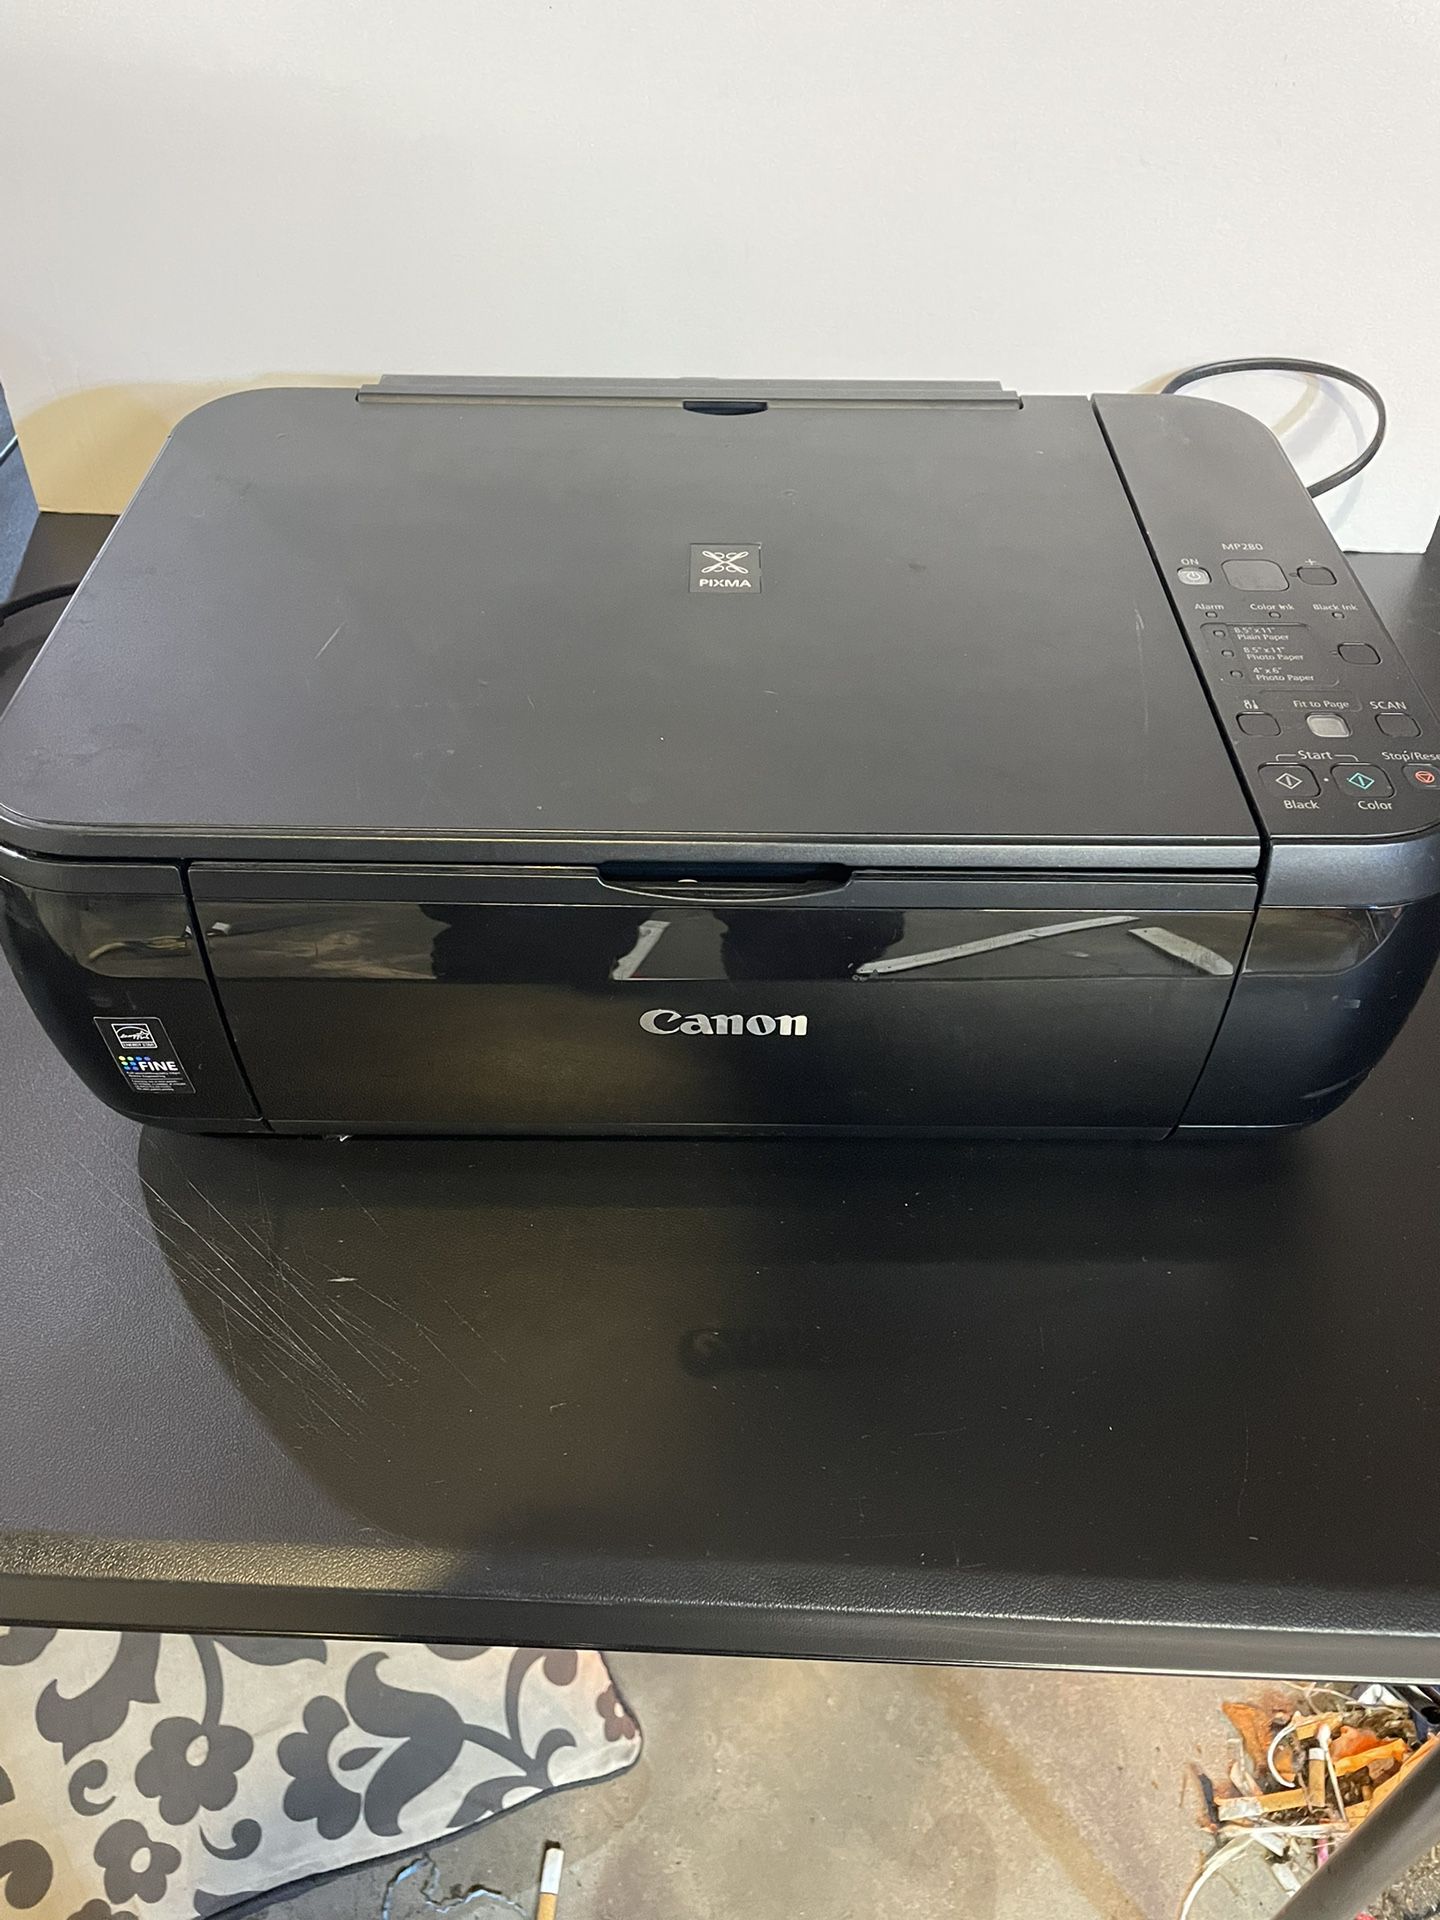 Canon Mp280 Printer